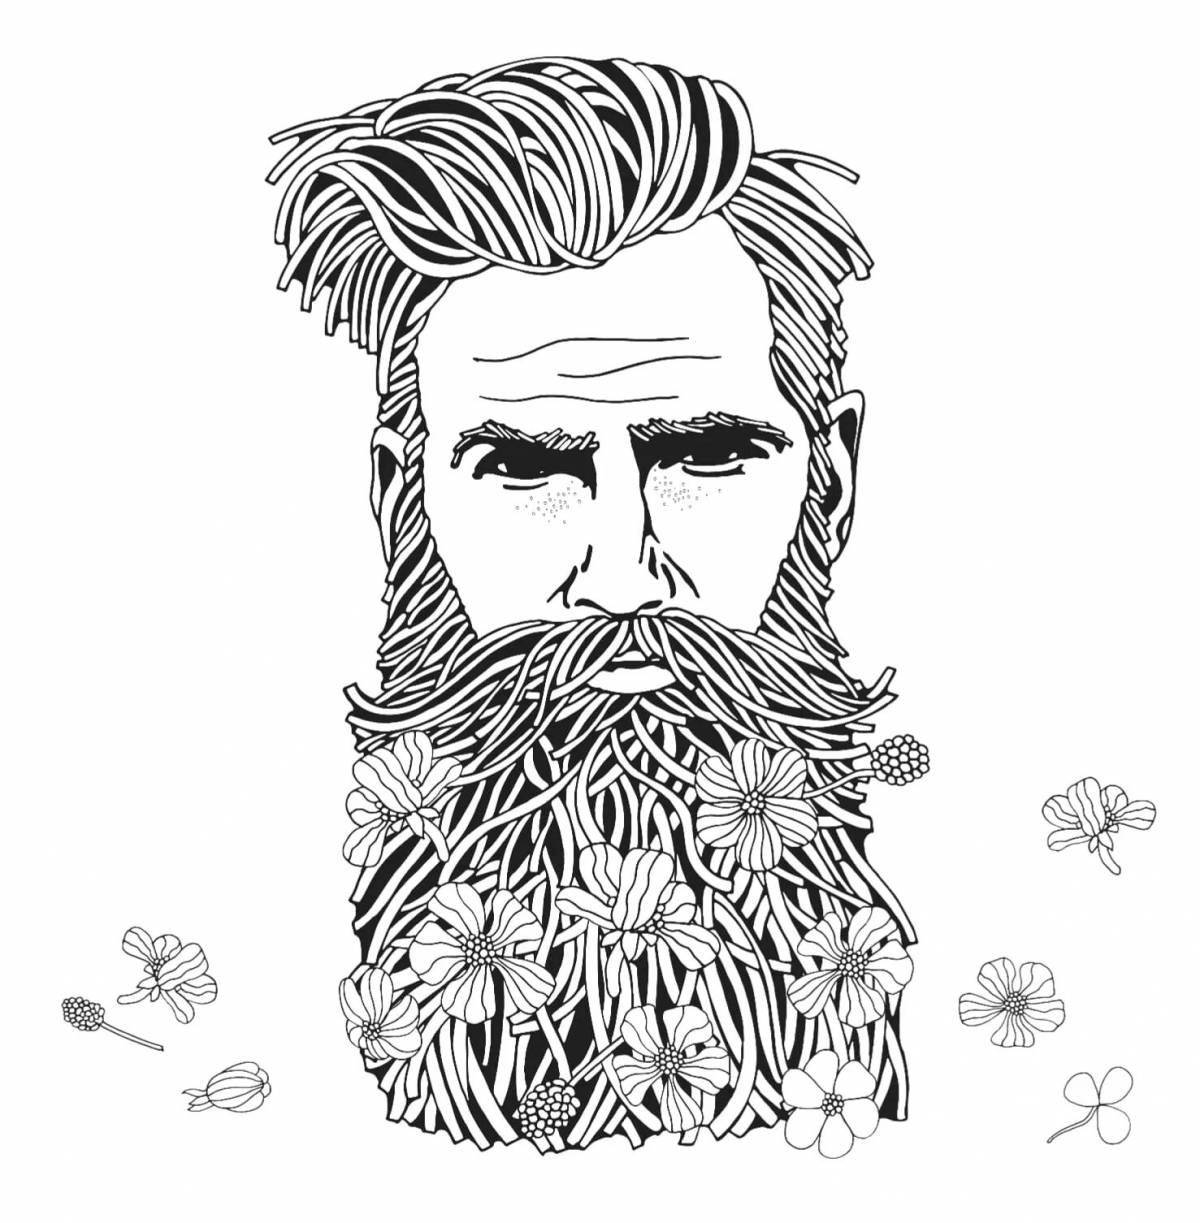 Innovative bodo beard coloring page for kids